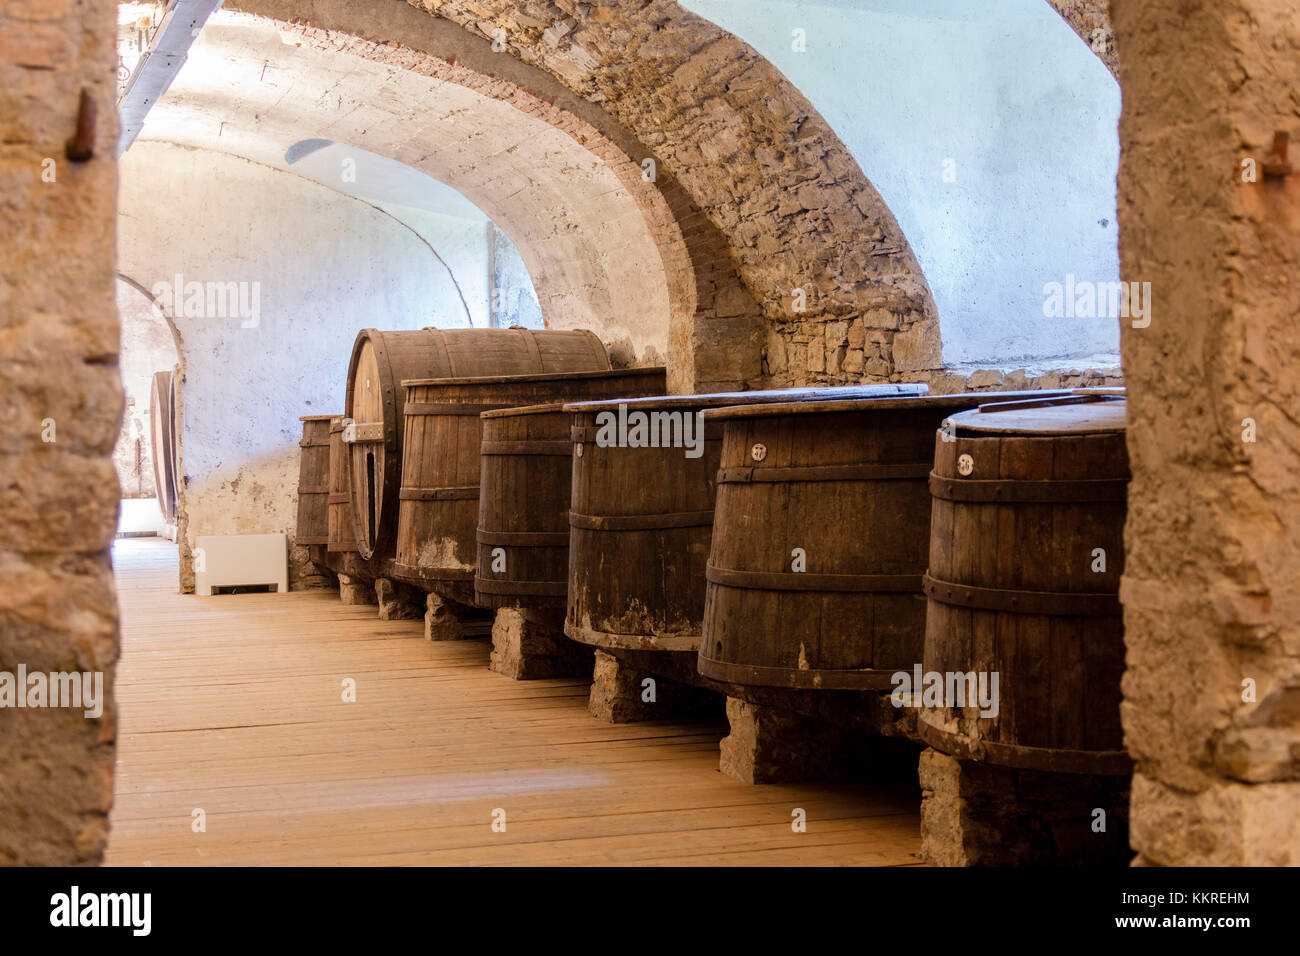 Holzfässern der Weinkeller des Klosters astino, longuelo, Provinz Bergamo, Lombardei, Italien, Europa Stockfoto